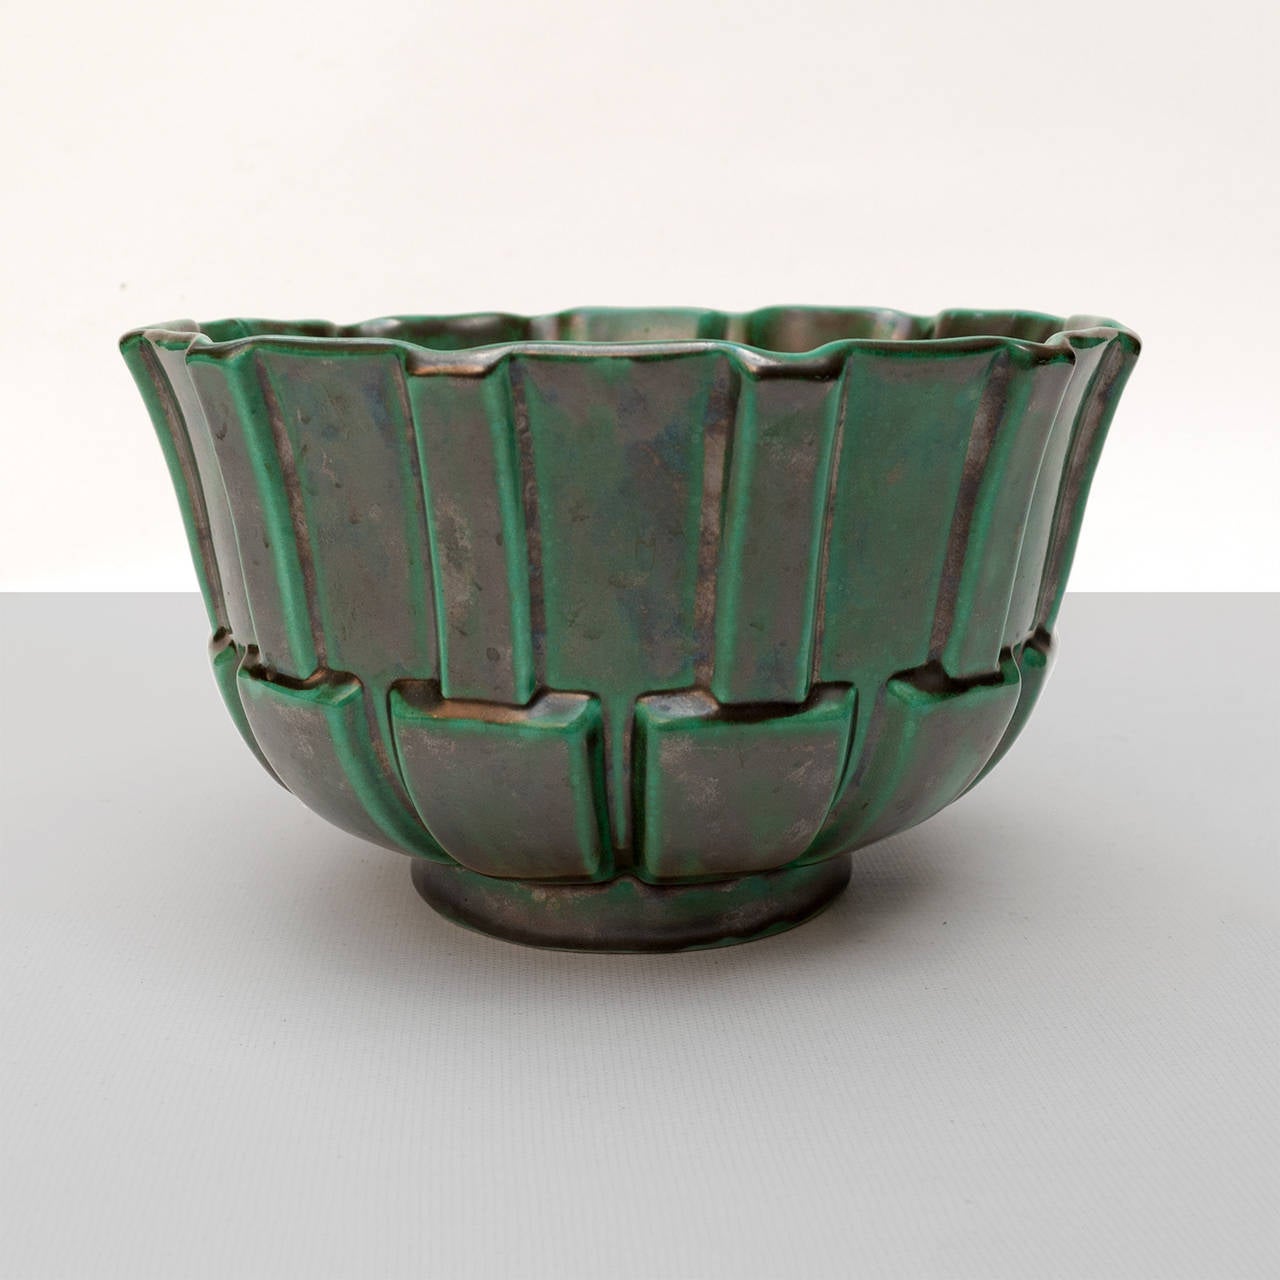 Swedish Art Deco ceramic footed bowl designed by Anna-Lisa Thomson with copper oxide glaze. Made by Upsala Ekeby circa 1930's. Diameter: 10